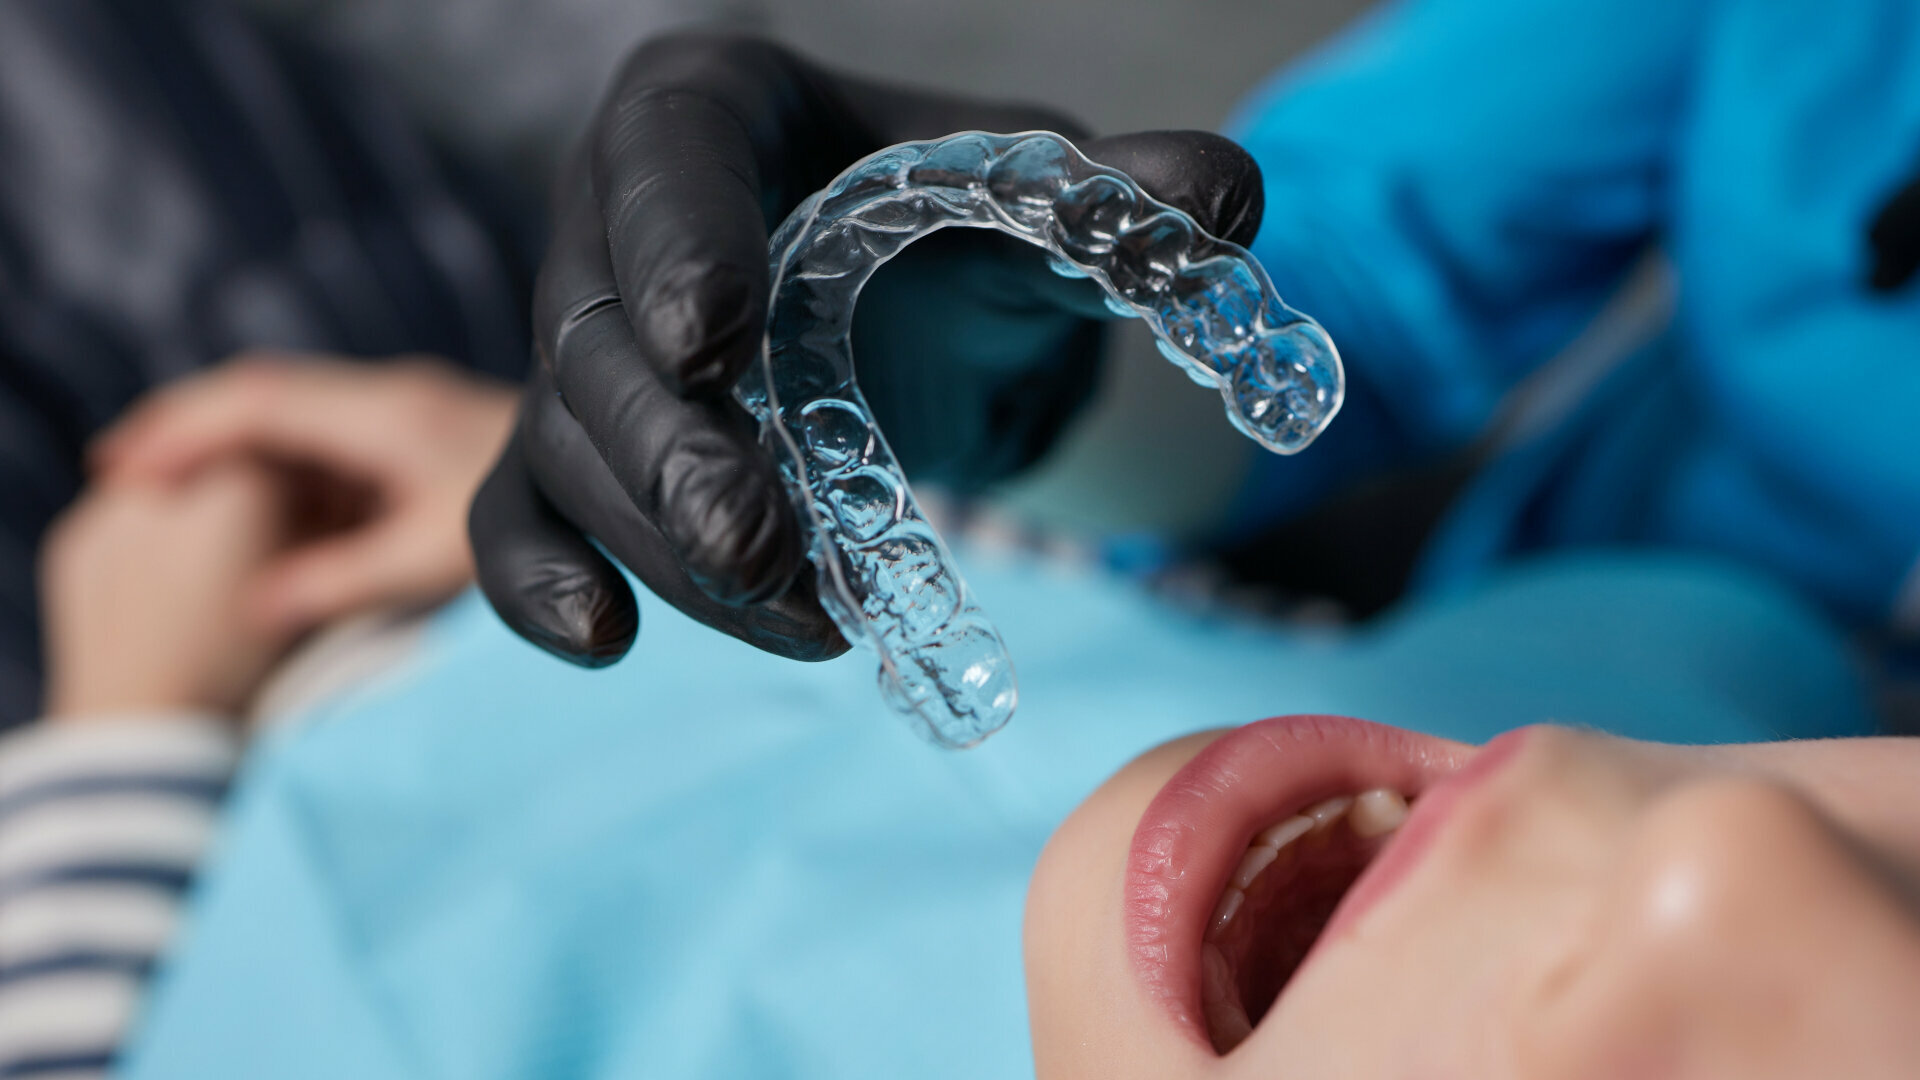 Drop in orthodontic case starts spooks Align Technology investors